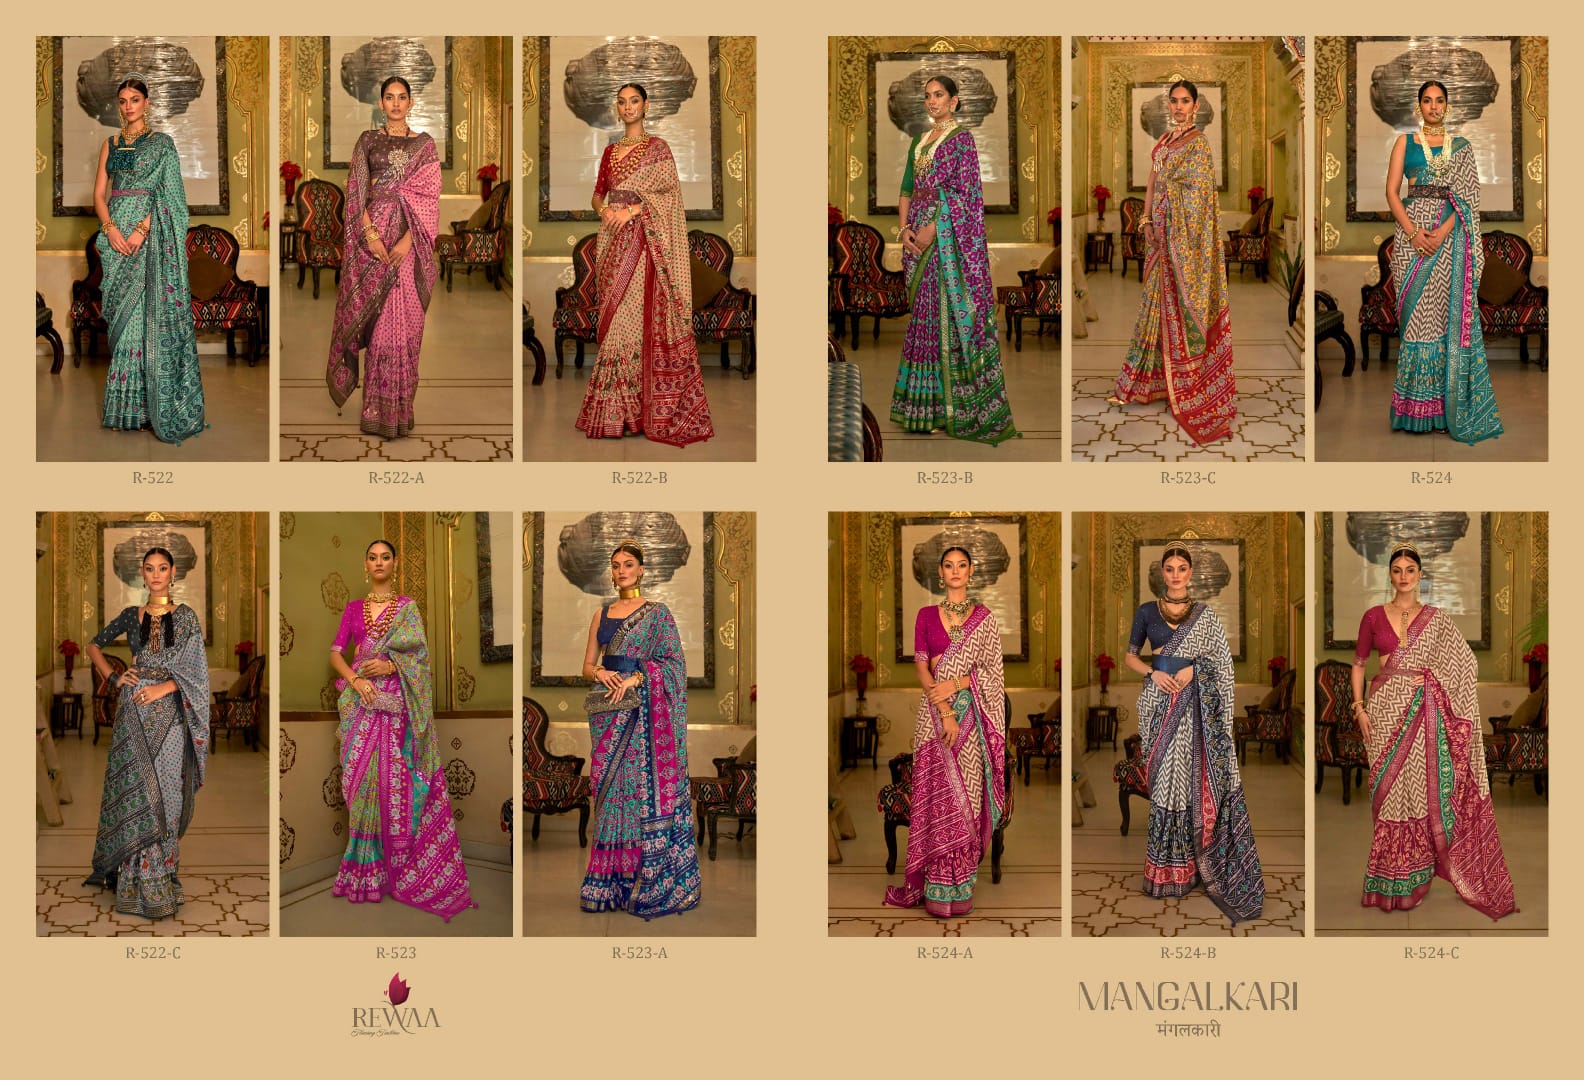 Rewaa Mangalkari collection 1